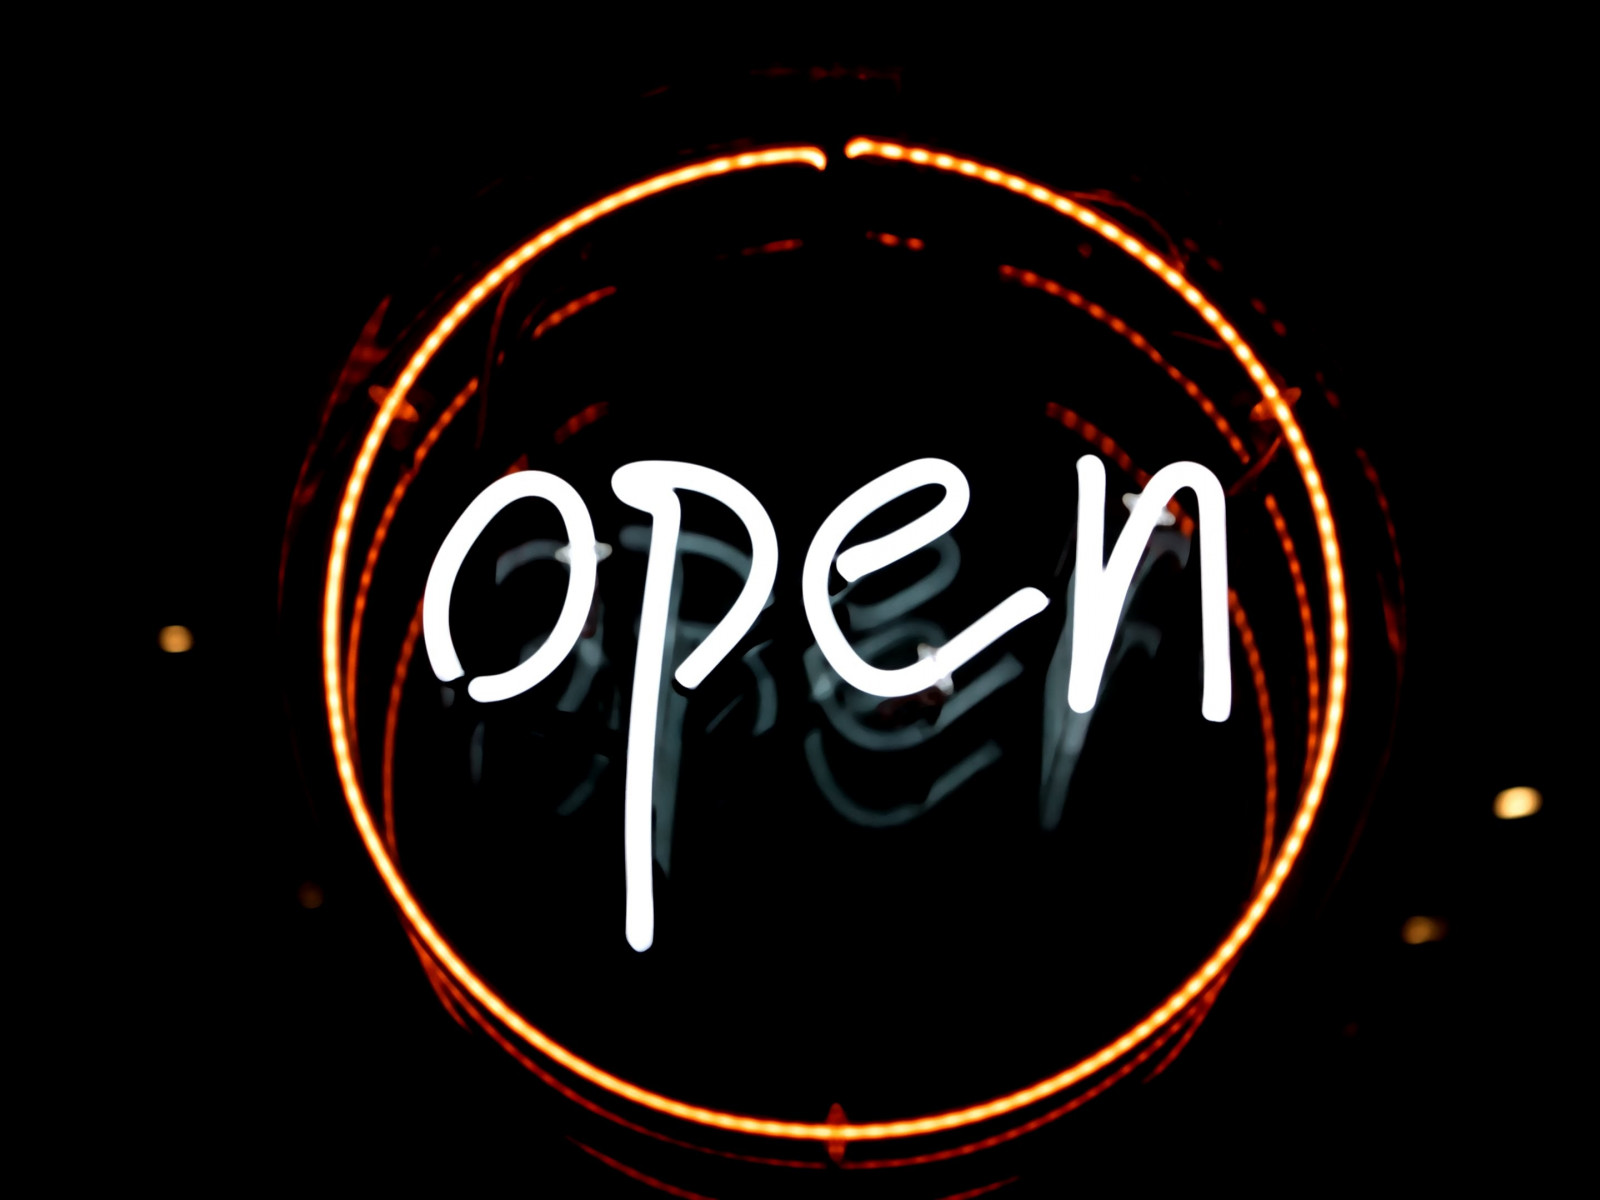 Open logo in light wallpaper 1600x1200